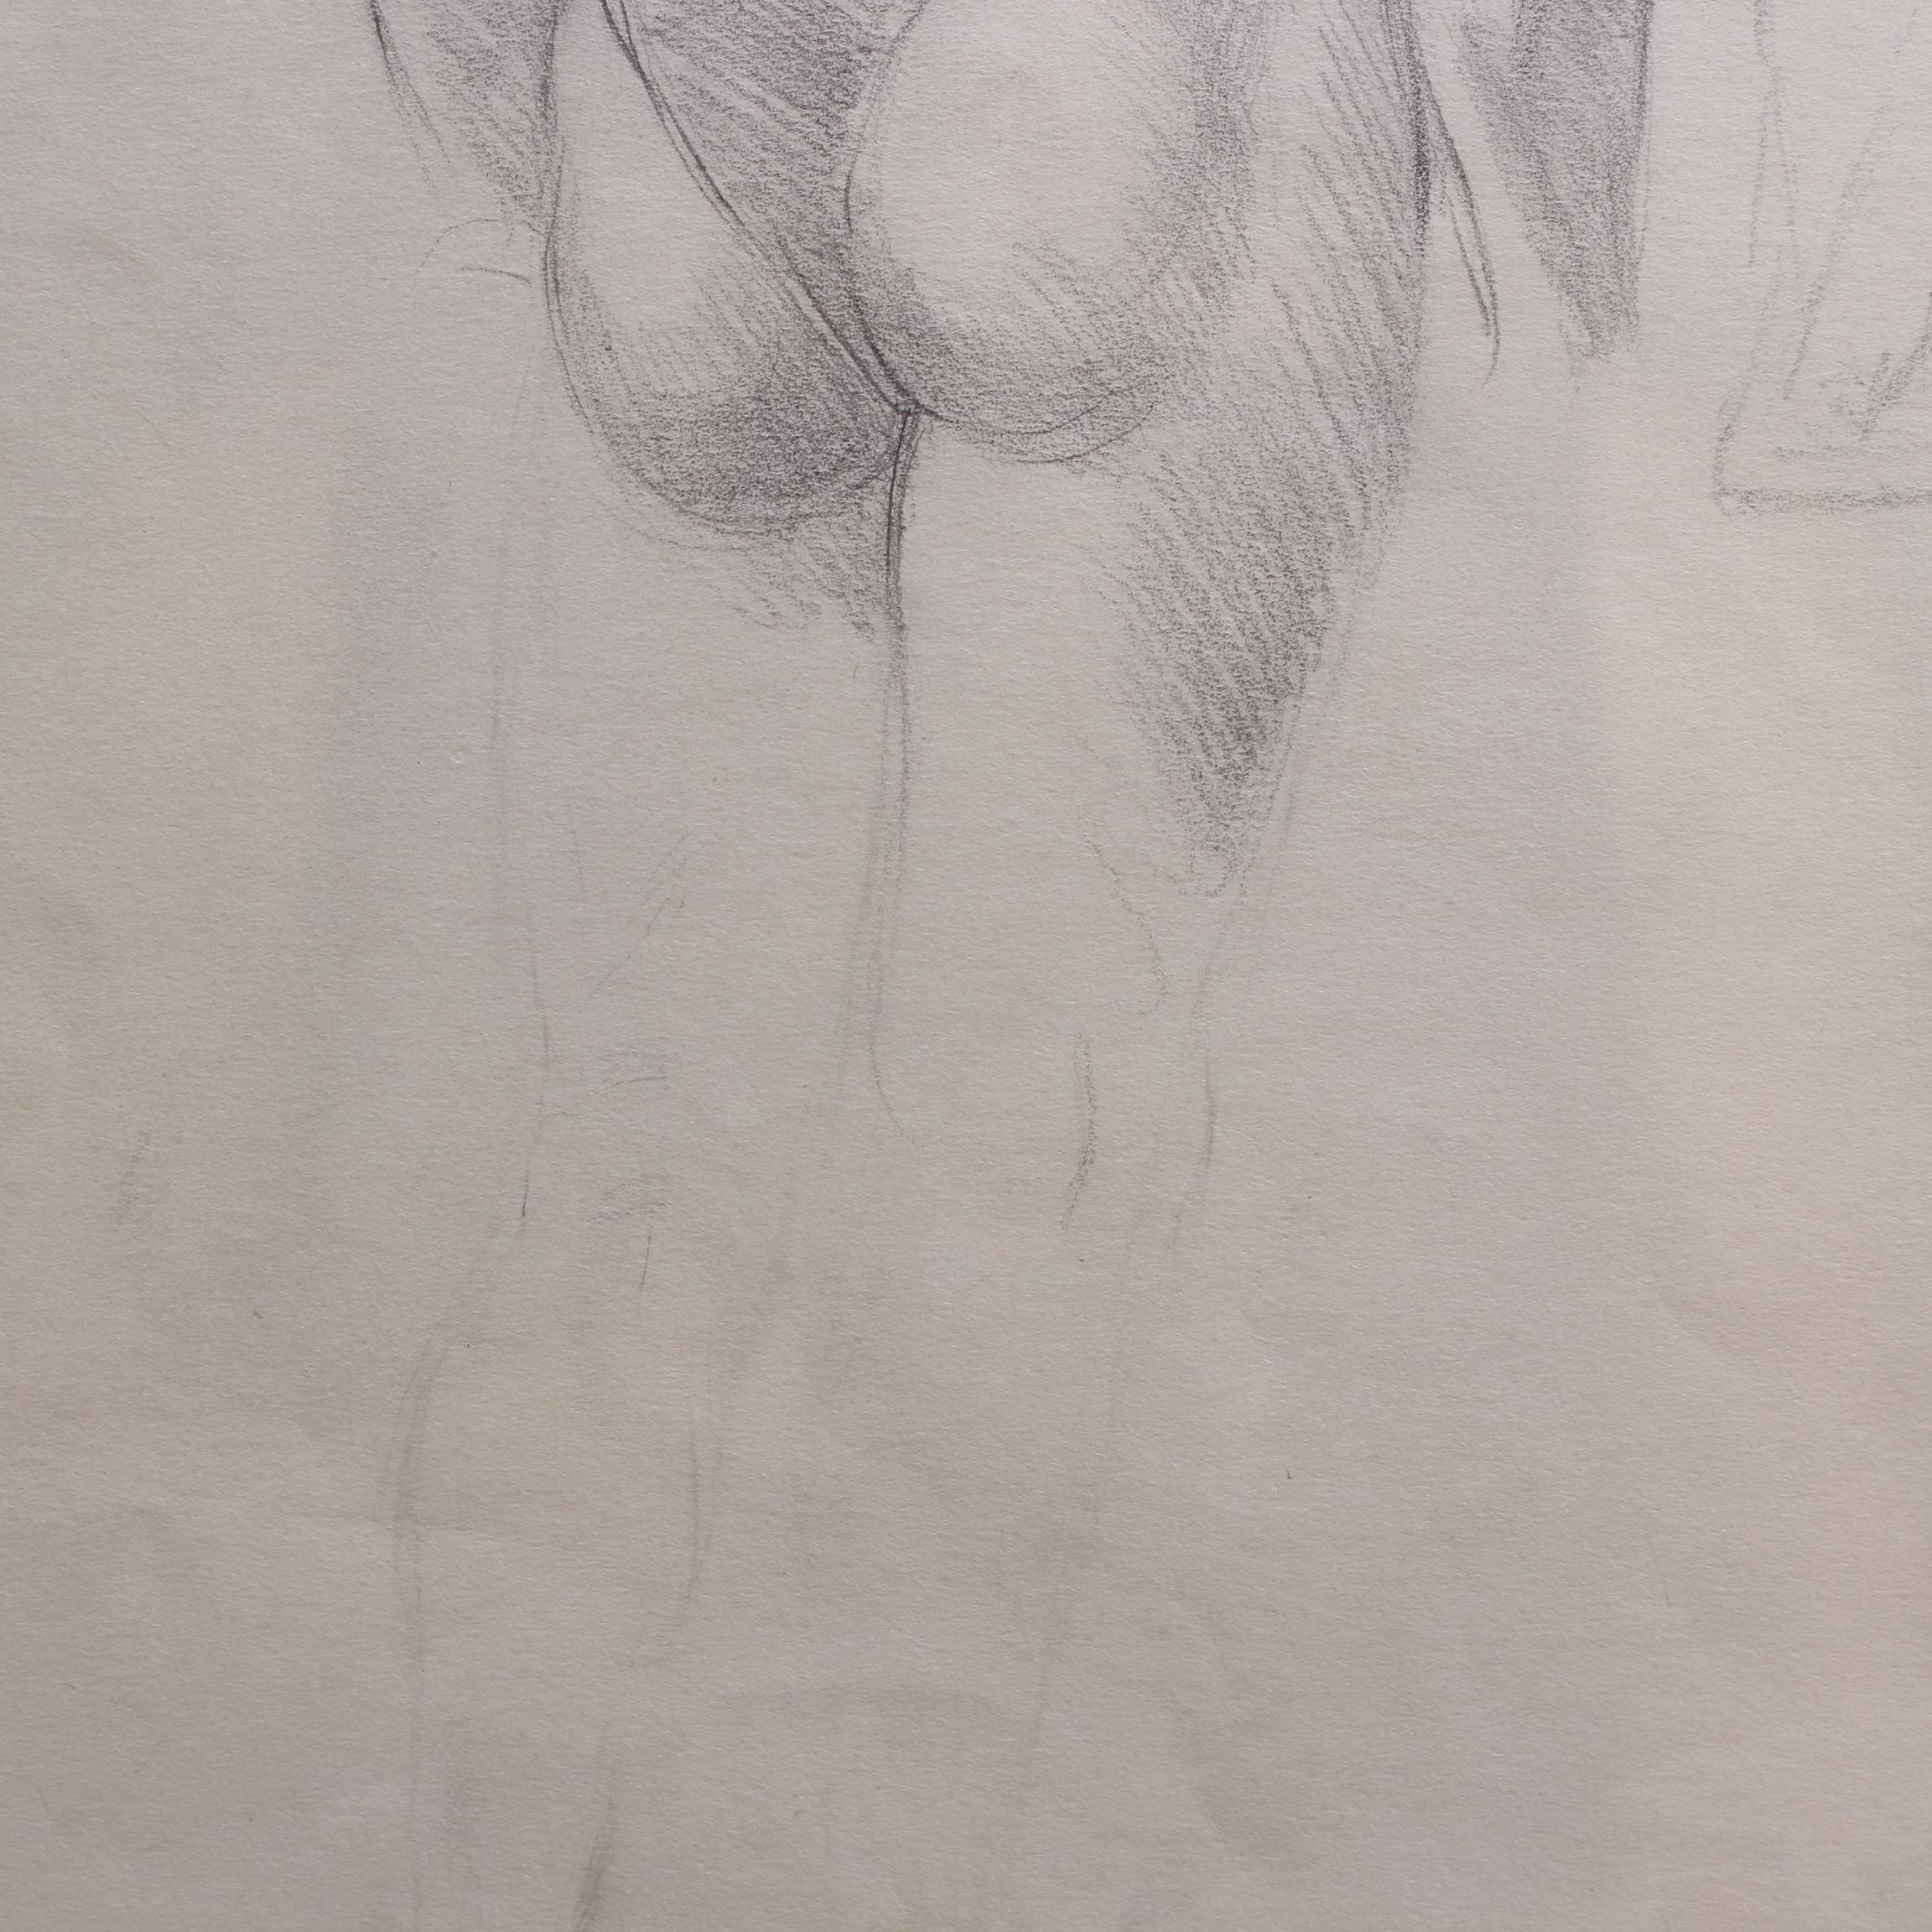 Male Nude Pencil Drawing by Bernard Sleigh RBSA (circa 1900-1920) For Sale 8